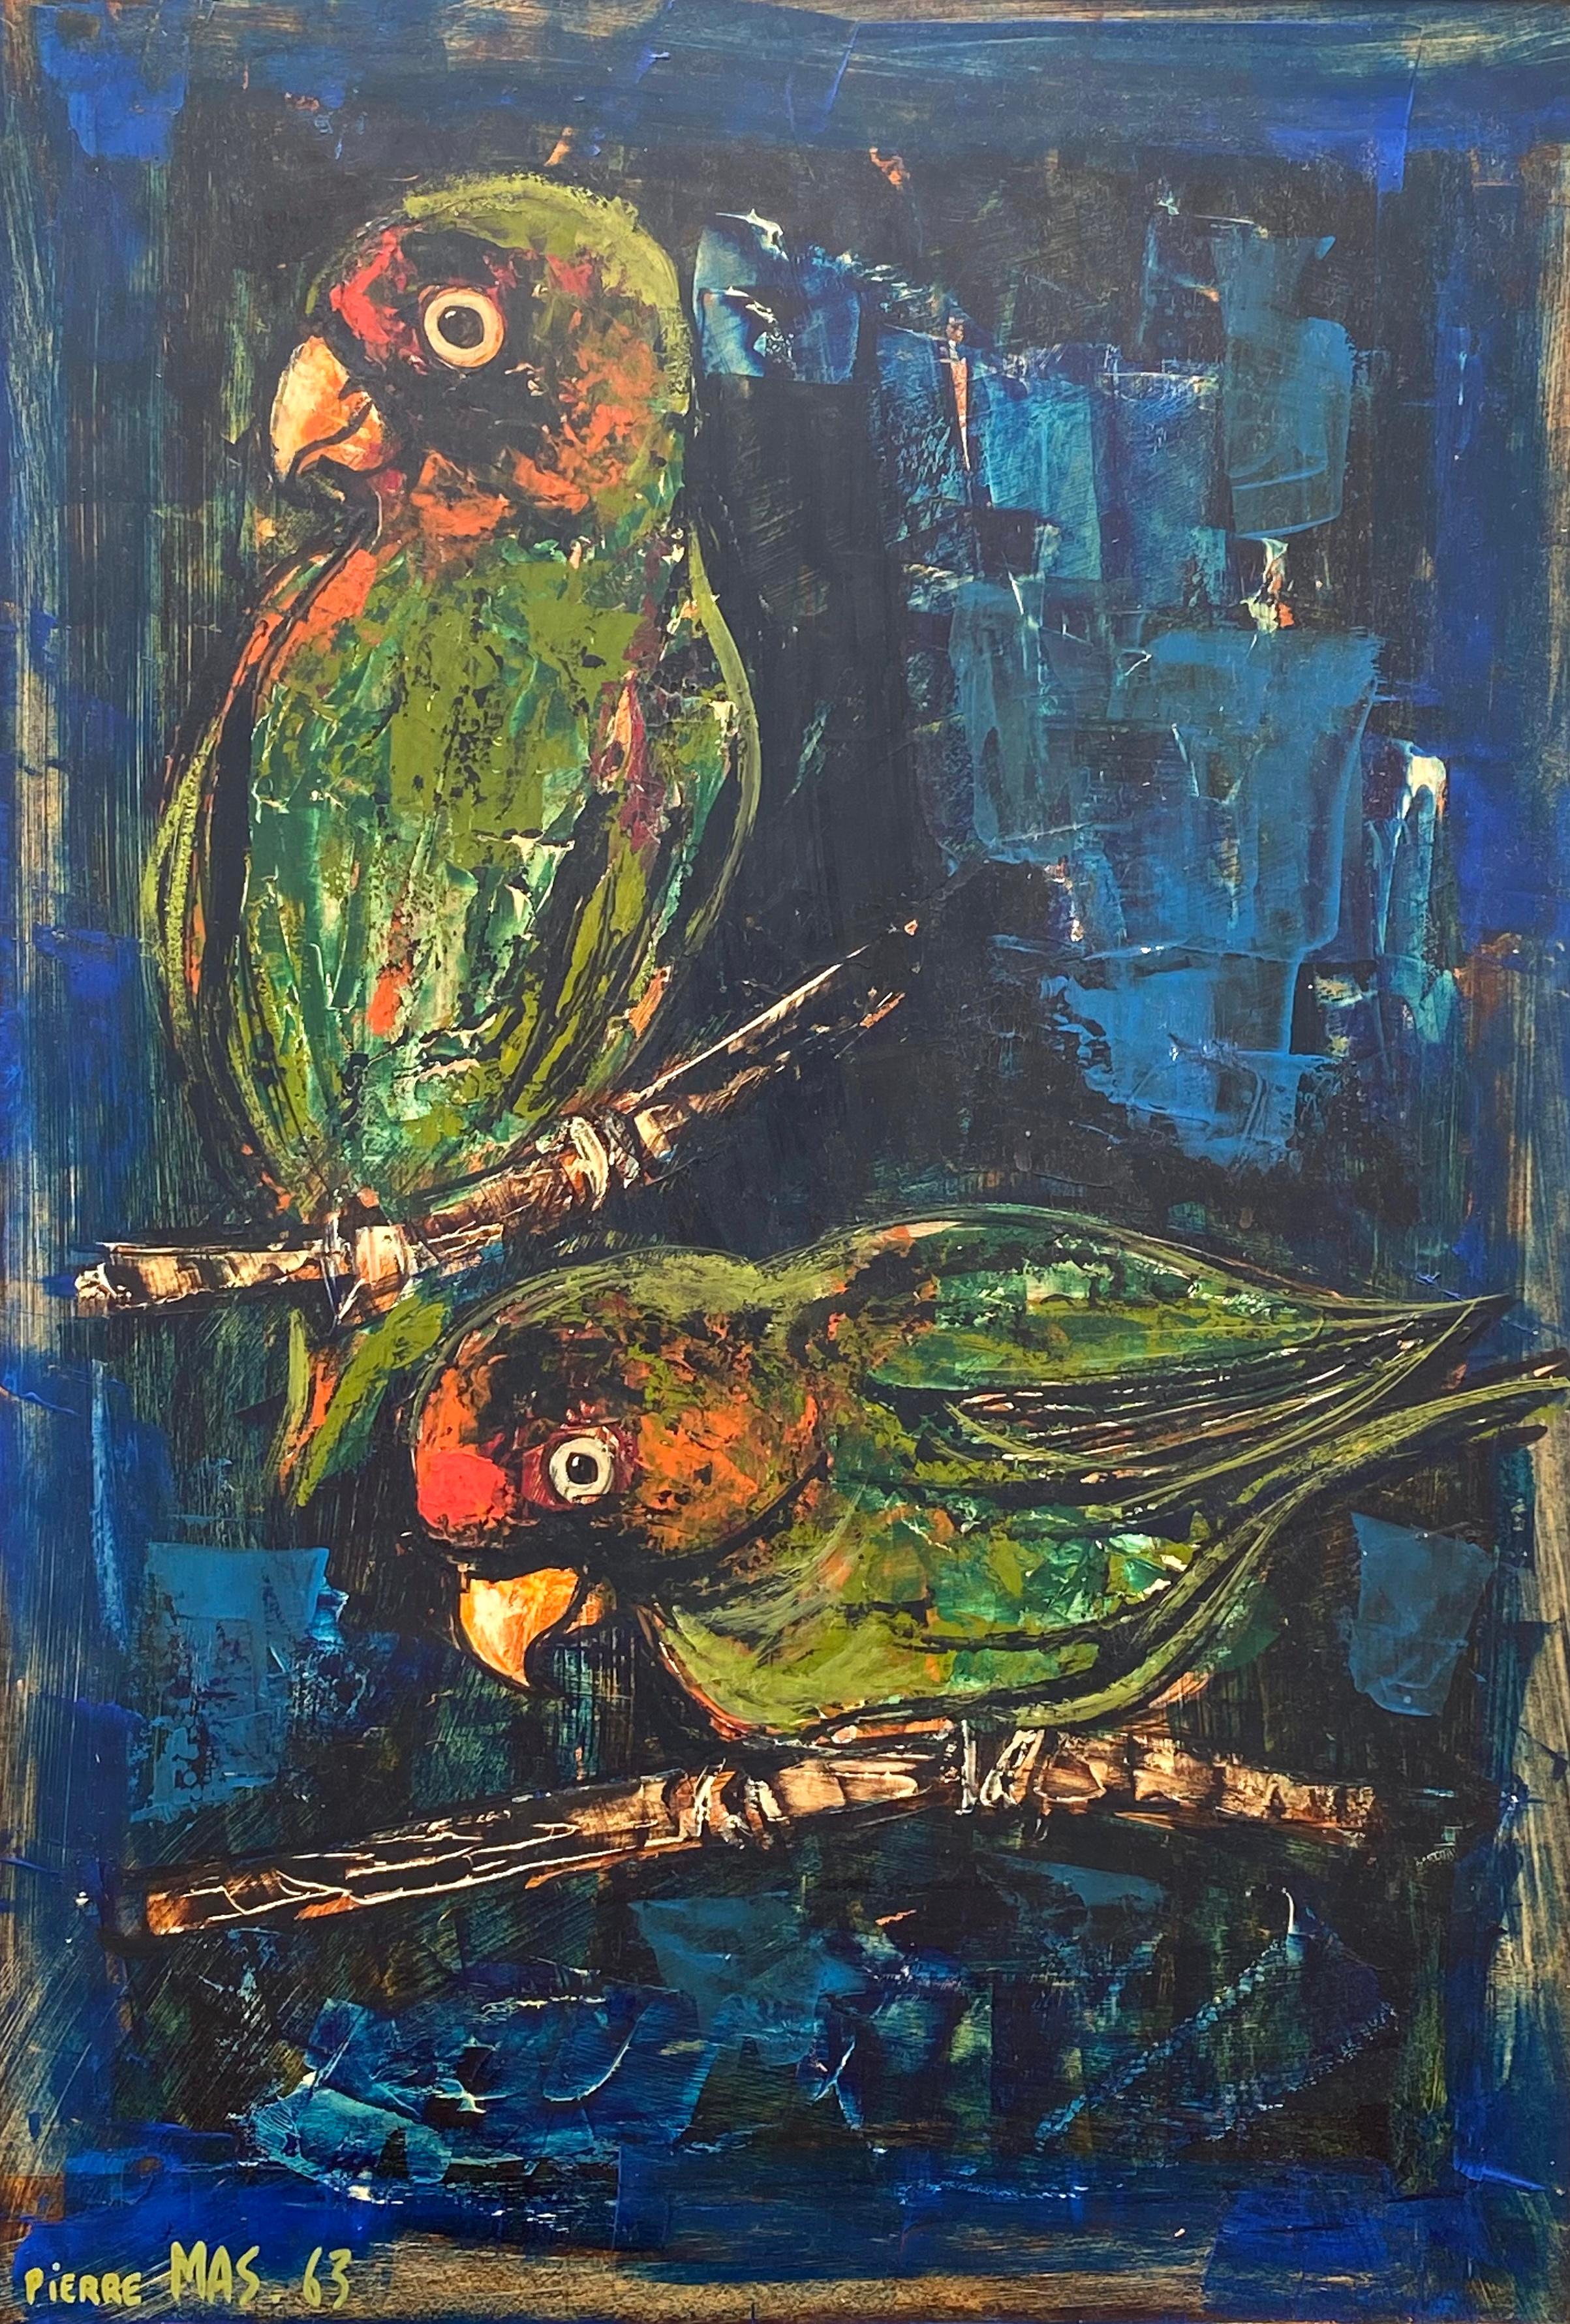 Pierre Mas  Animal Painting - “Parrots”